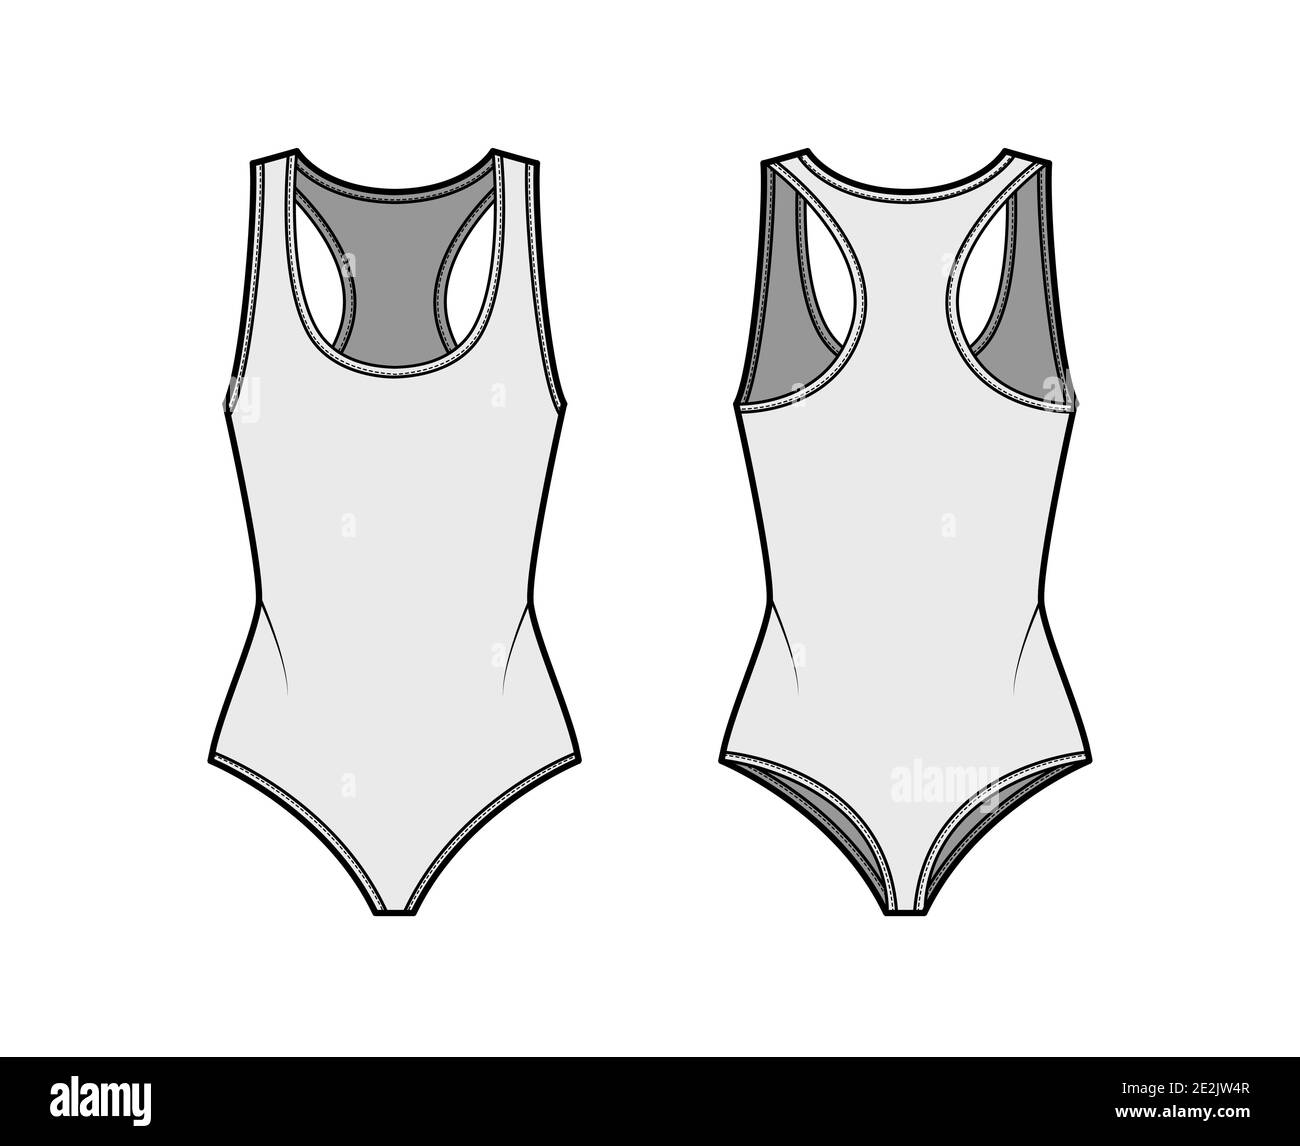 https://c8.alamy.com/comp/2E2JW4R/cotton-jersey-thong-bodysuit-technical-fashion-illustration-with-racer-back-deep-u-neckline-flat-outwear-one-piece-apparel-template-front-back-grey-color-women-men-unisex-swimsuit-cad-mockup-2E2JW4R.jpg